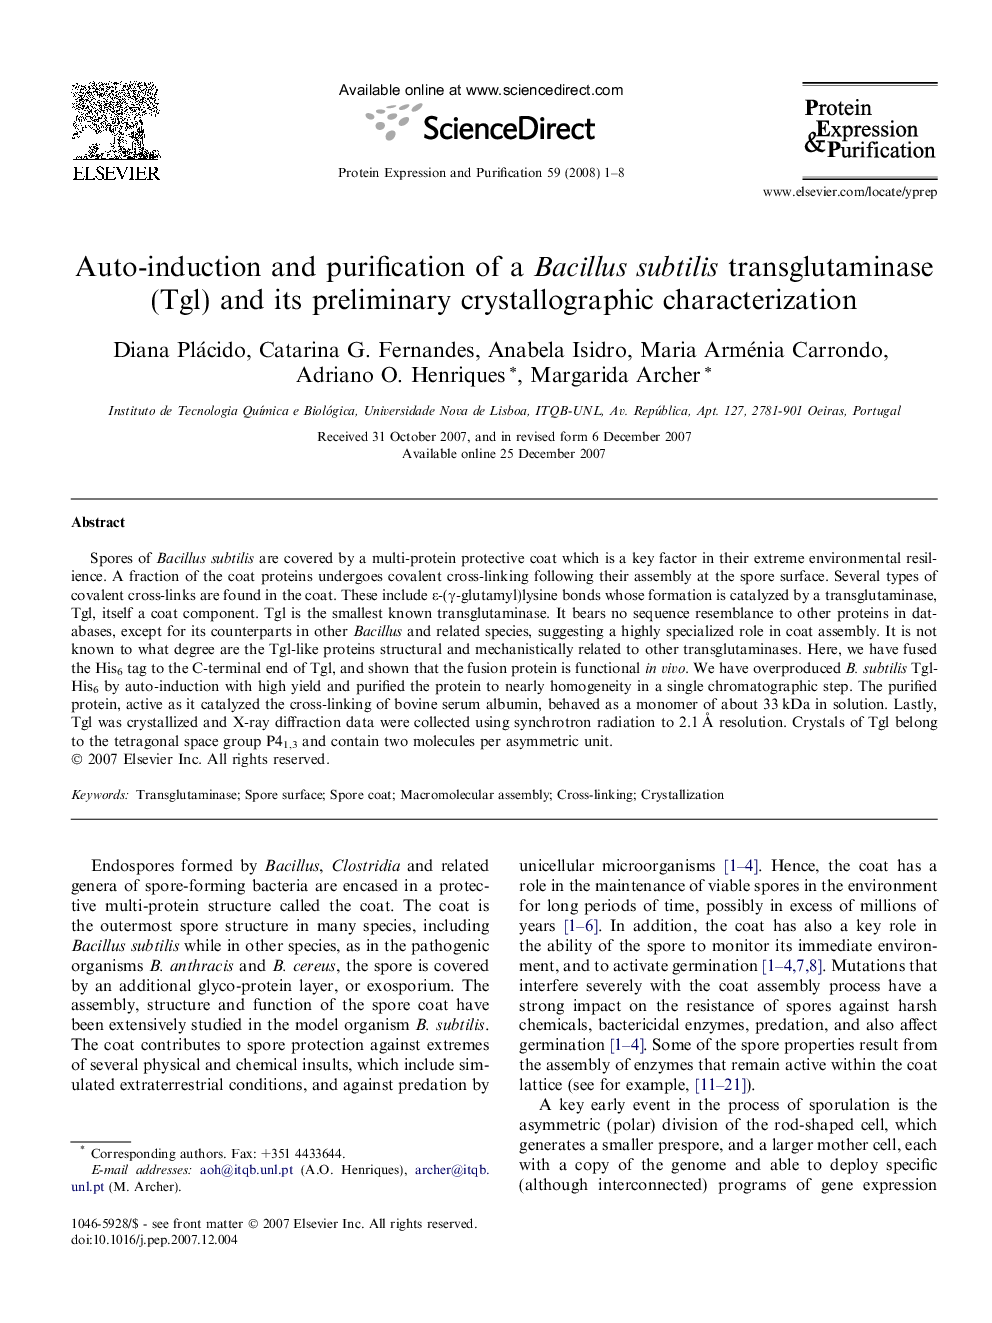 Auto-induction and purification of a Bacillus subtilis transglutaminase (Tgl) and its preliminary crystallographic characterization